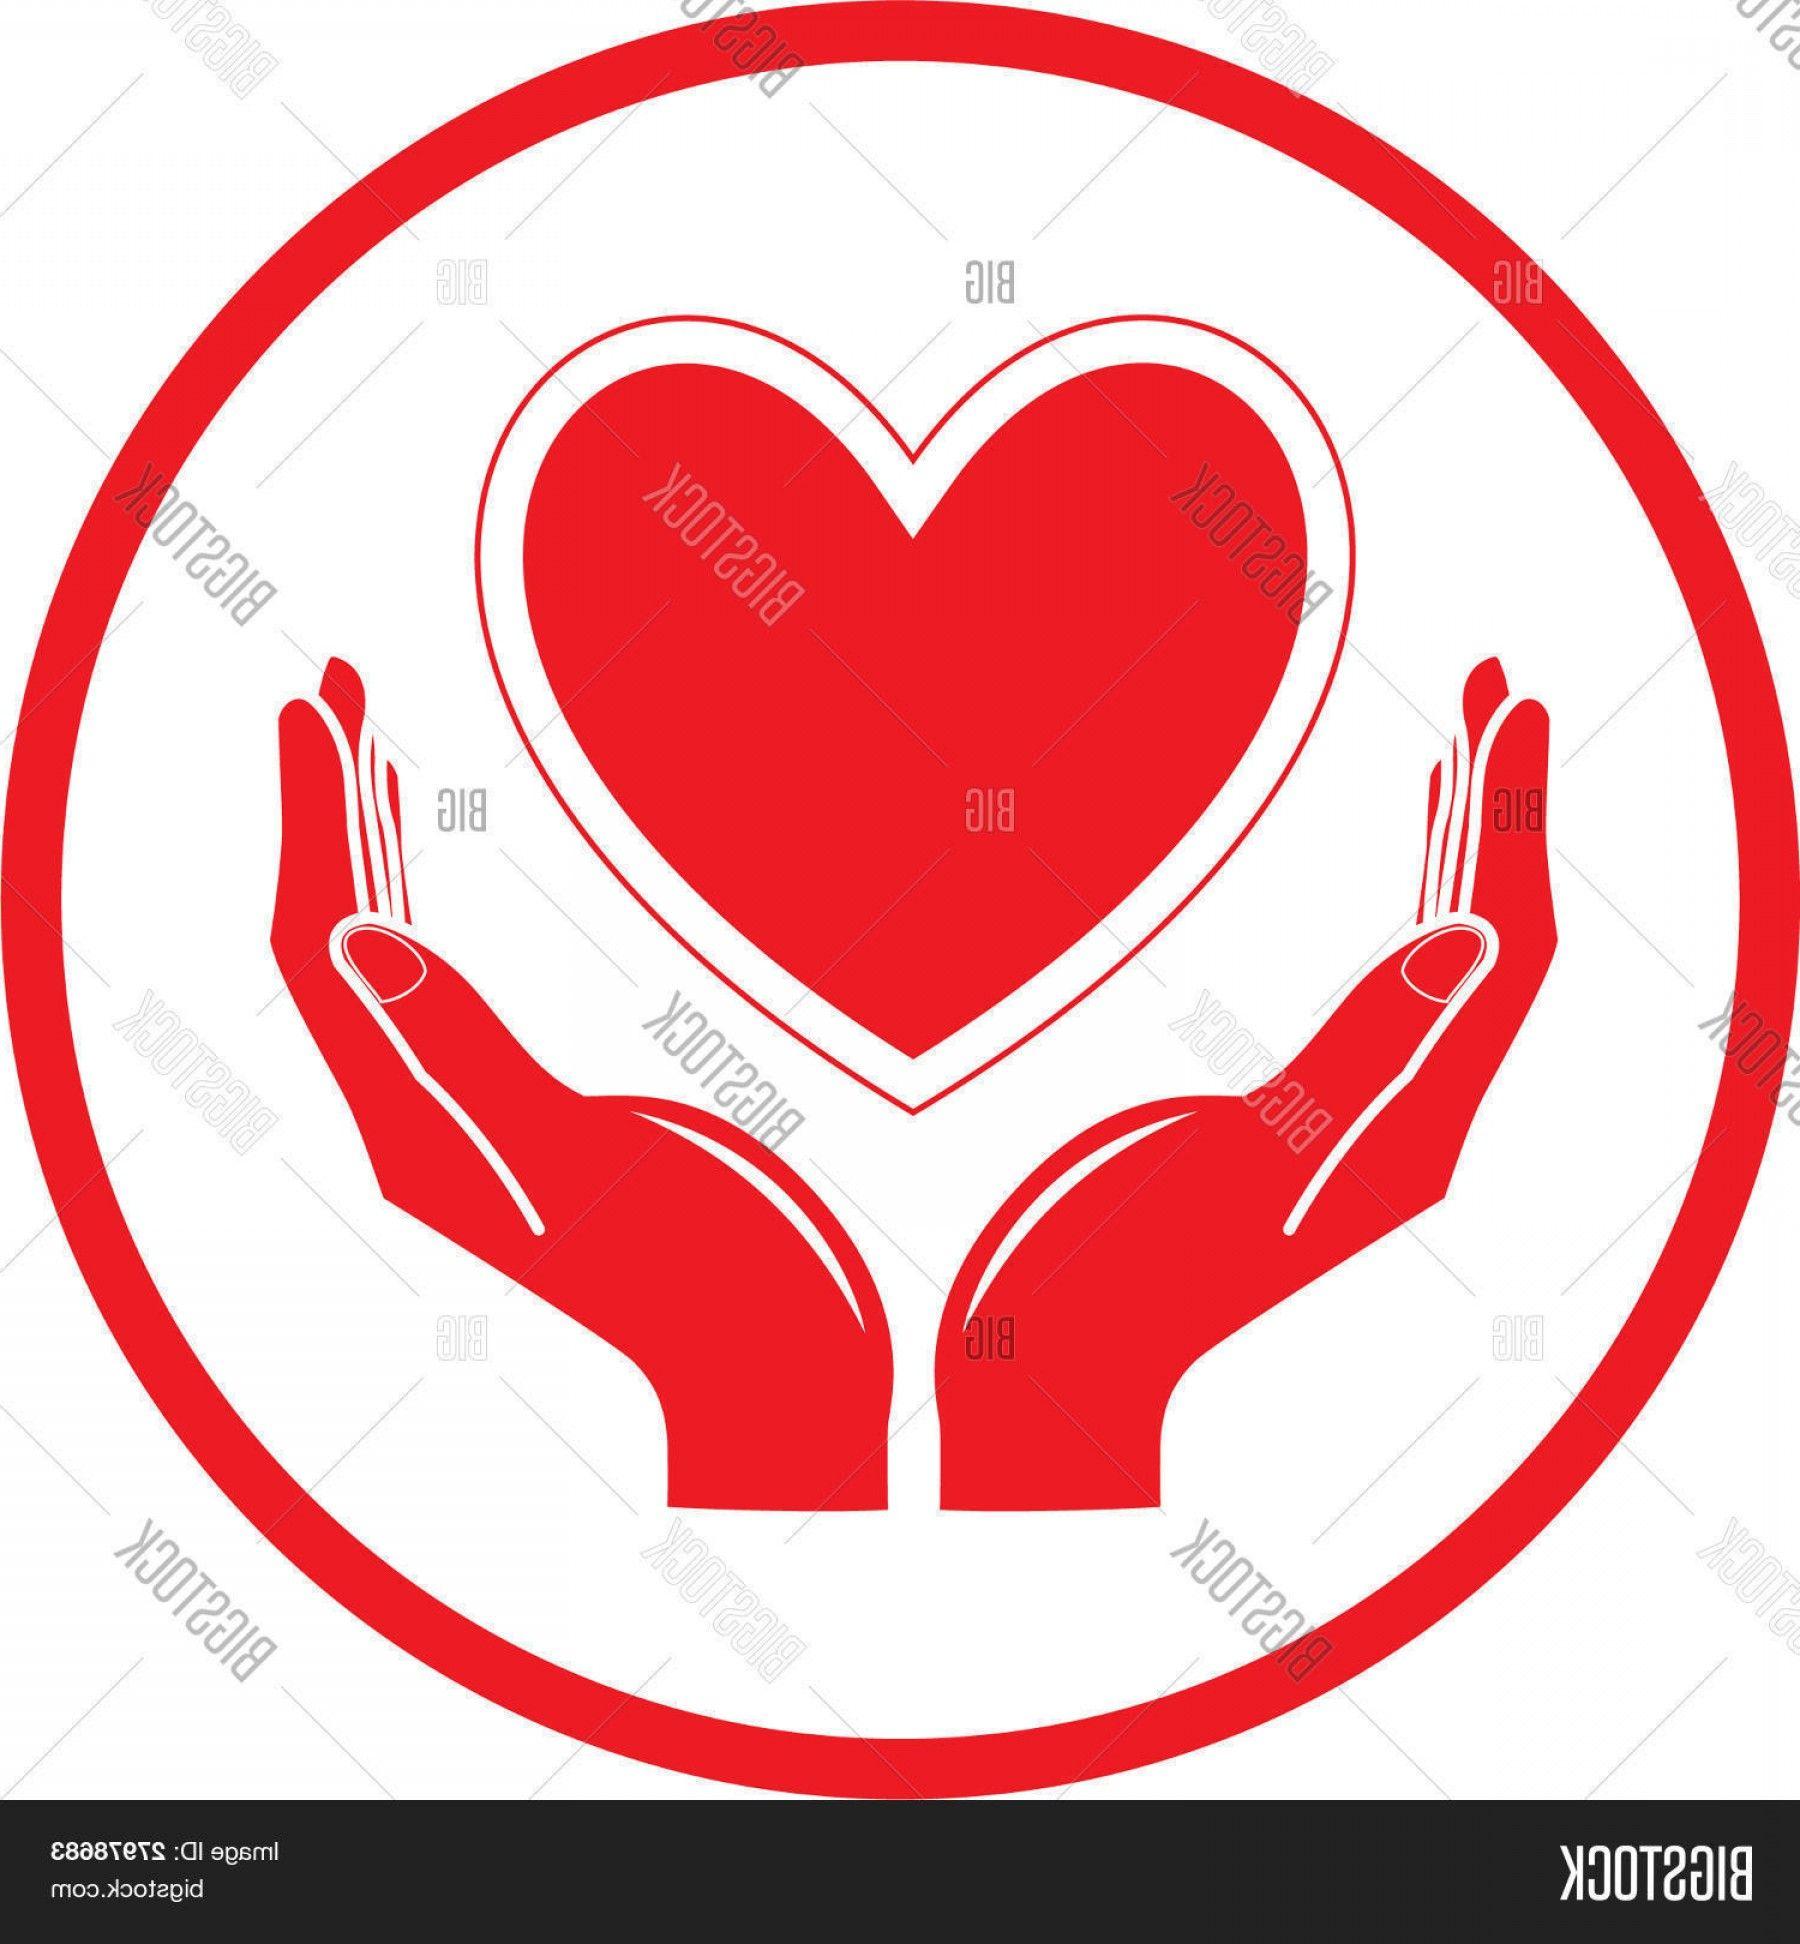 Red Heart Hands Logo - Heart Hands Vector